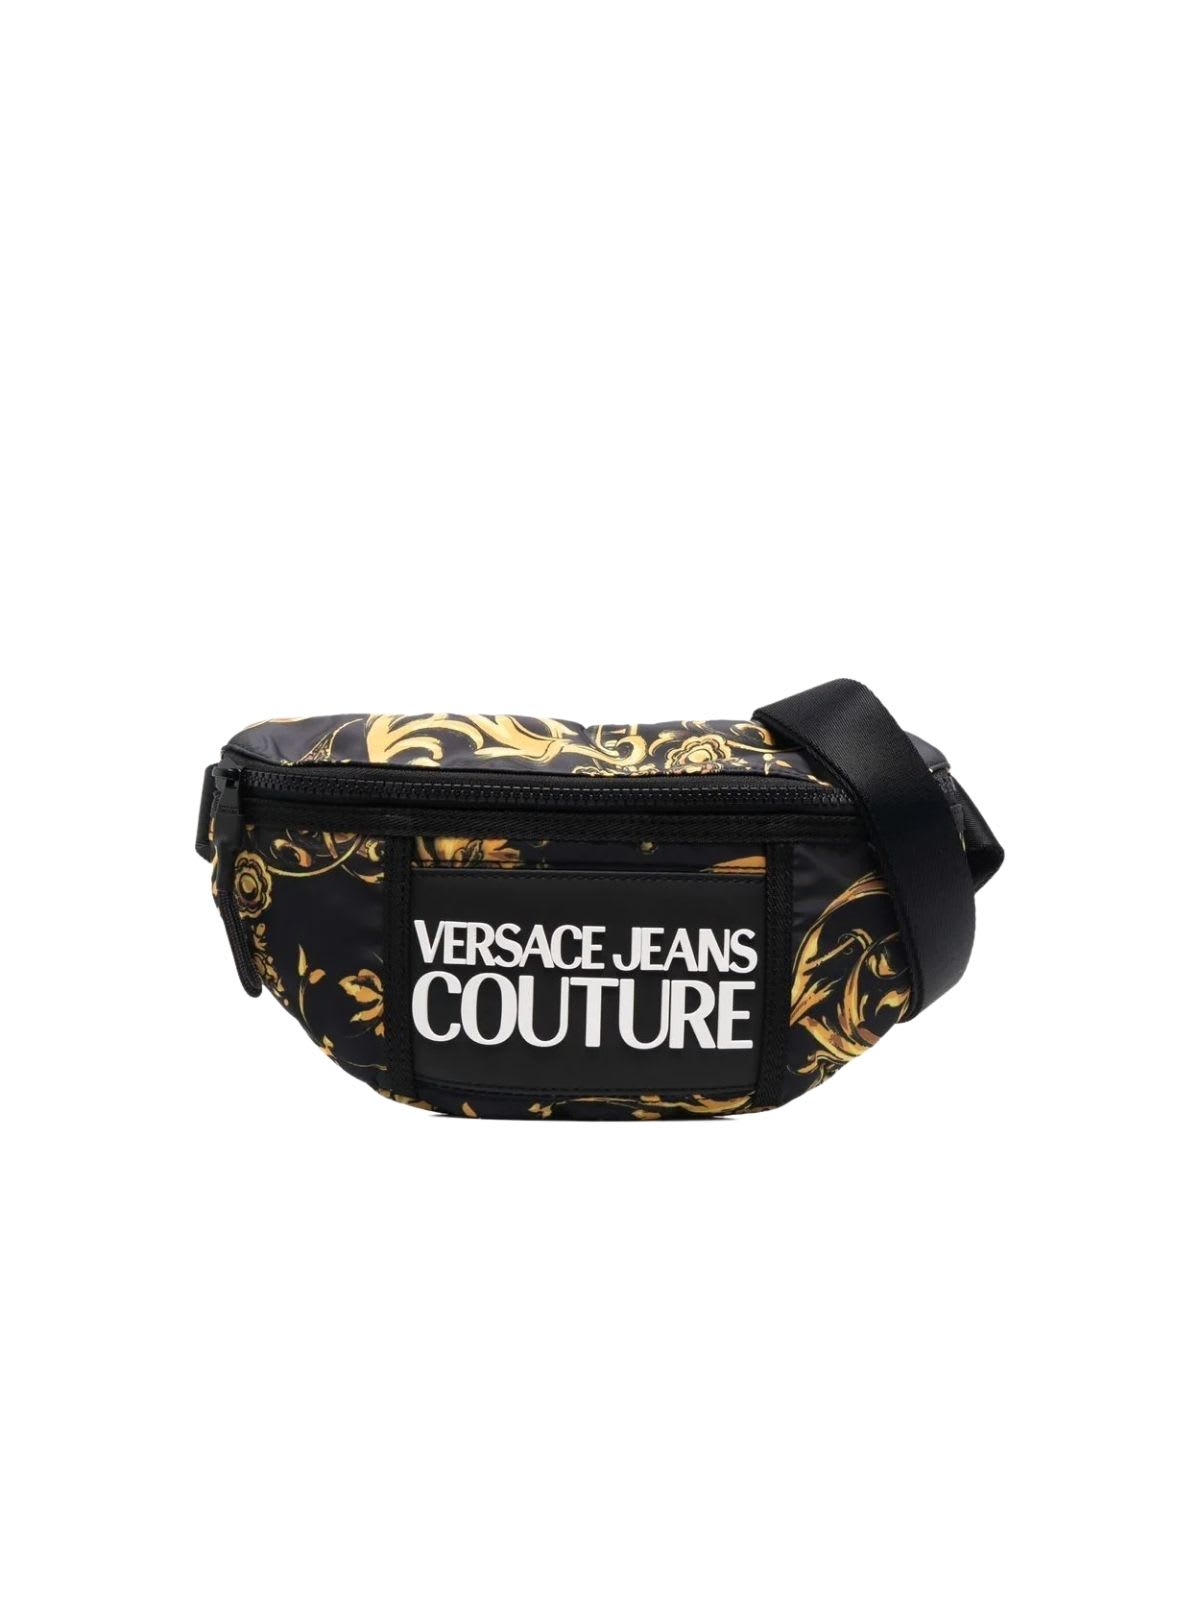 Versace Jeans Couture Sketch 5 Bags Printed Nylon Macrologo Belt Bag